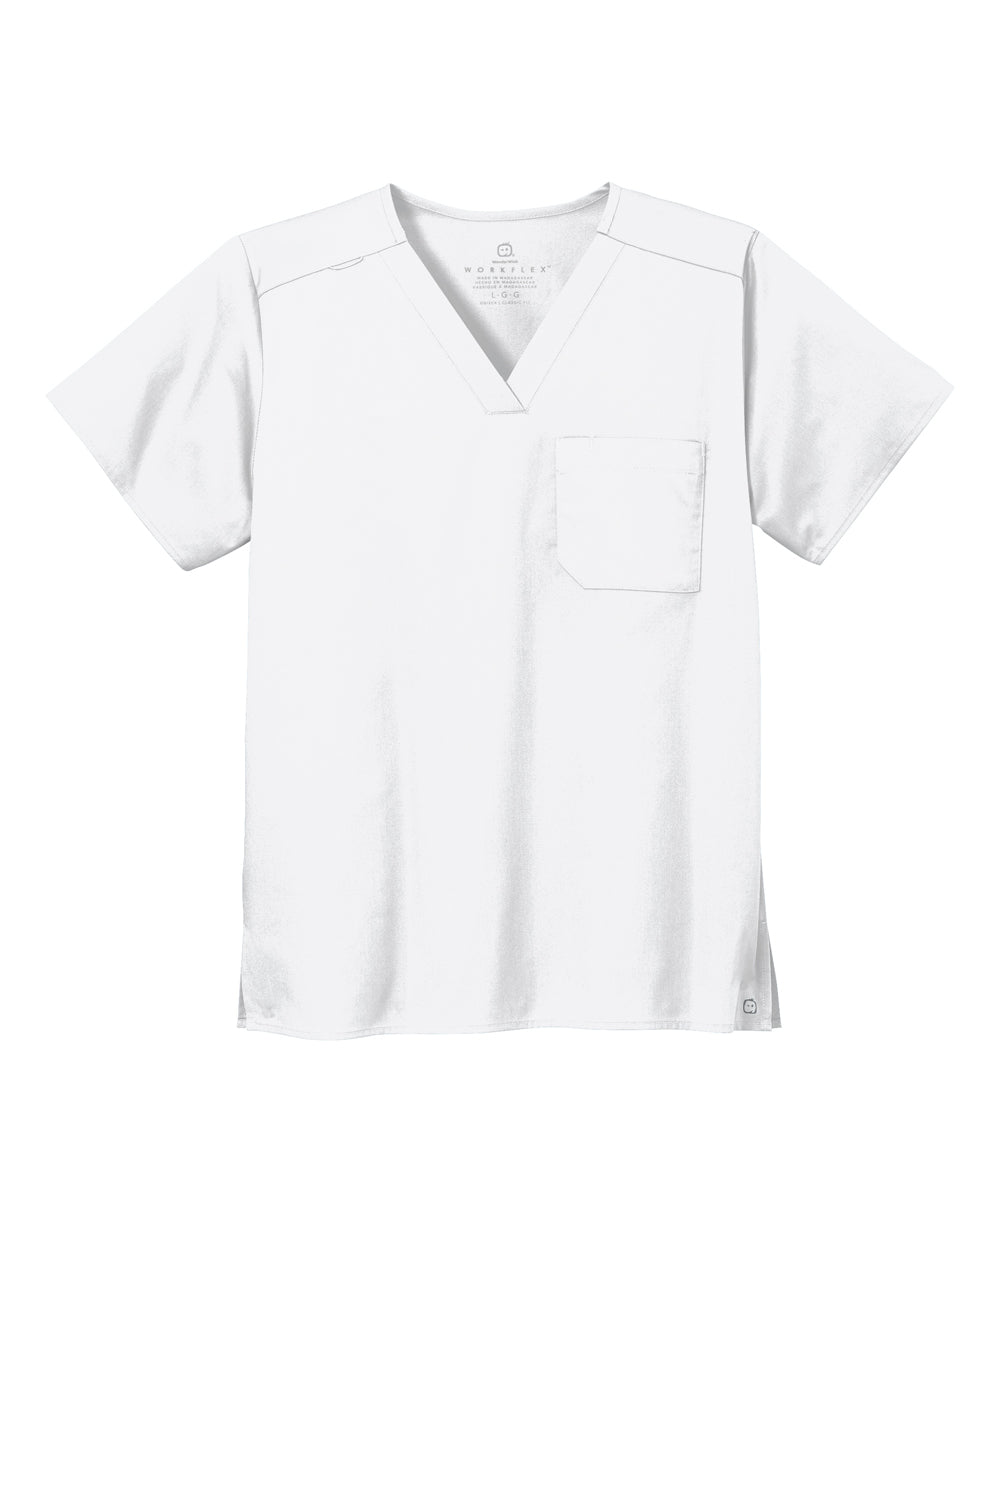 Wonderwink WW3160 WorkFlex Short Sleeve V-Neck Shirt w/ Pocket White Flat Front